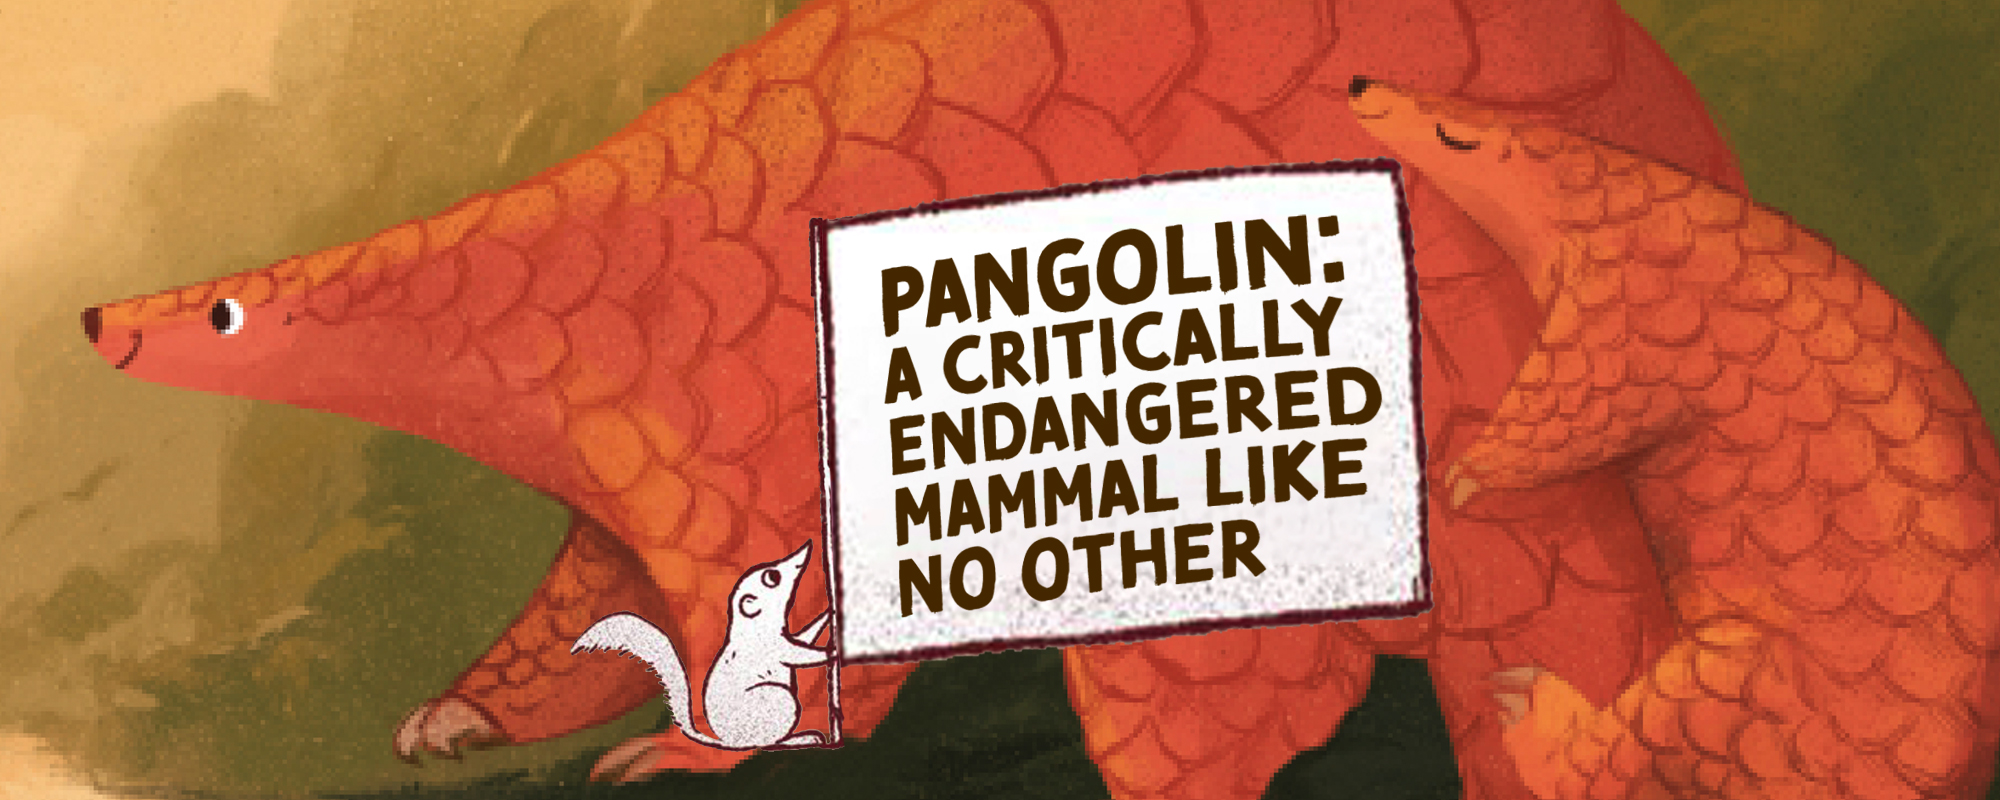 Pangolin: A Critically Endangered Mammal Like No Other